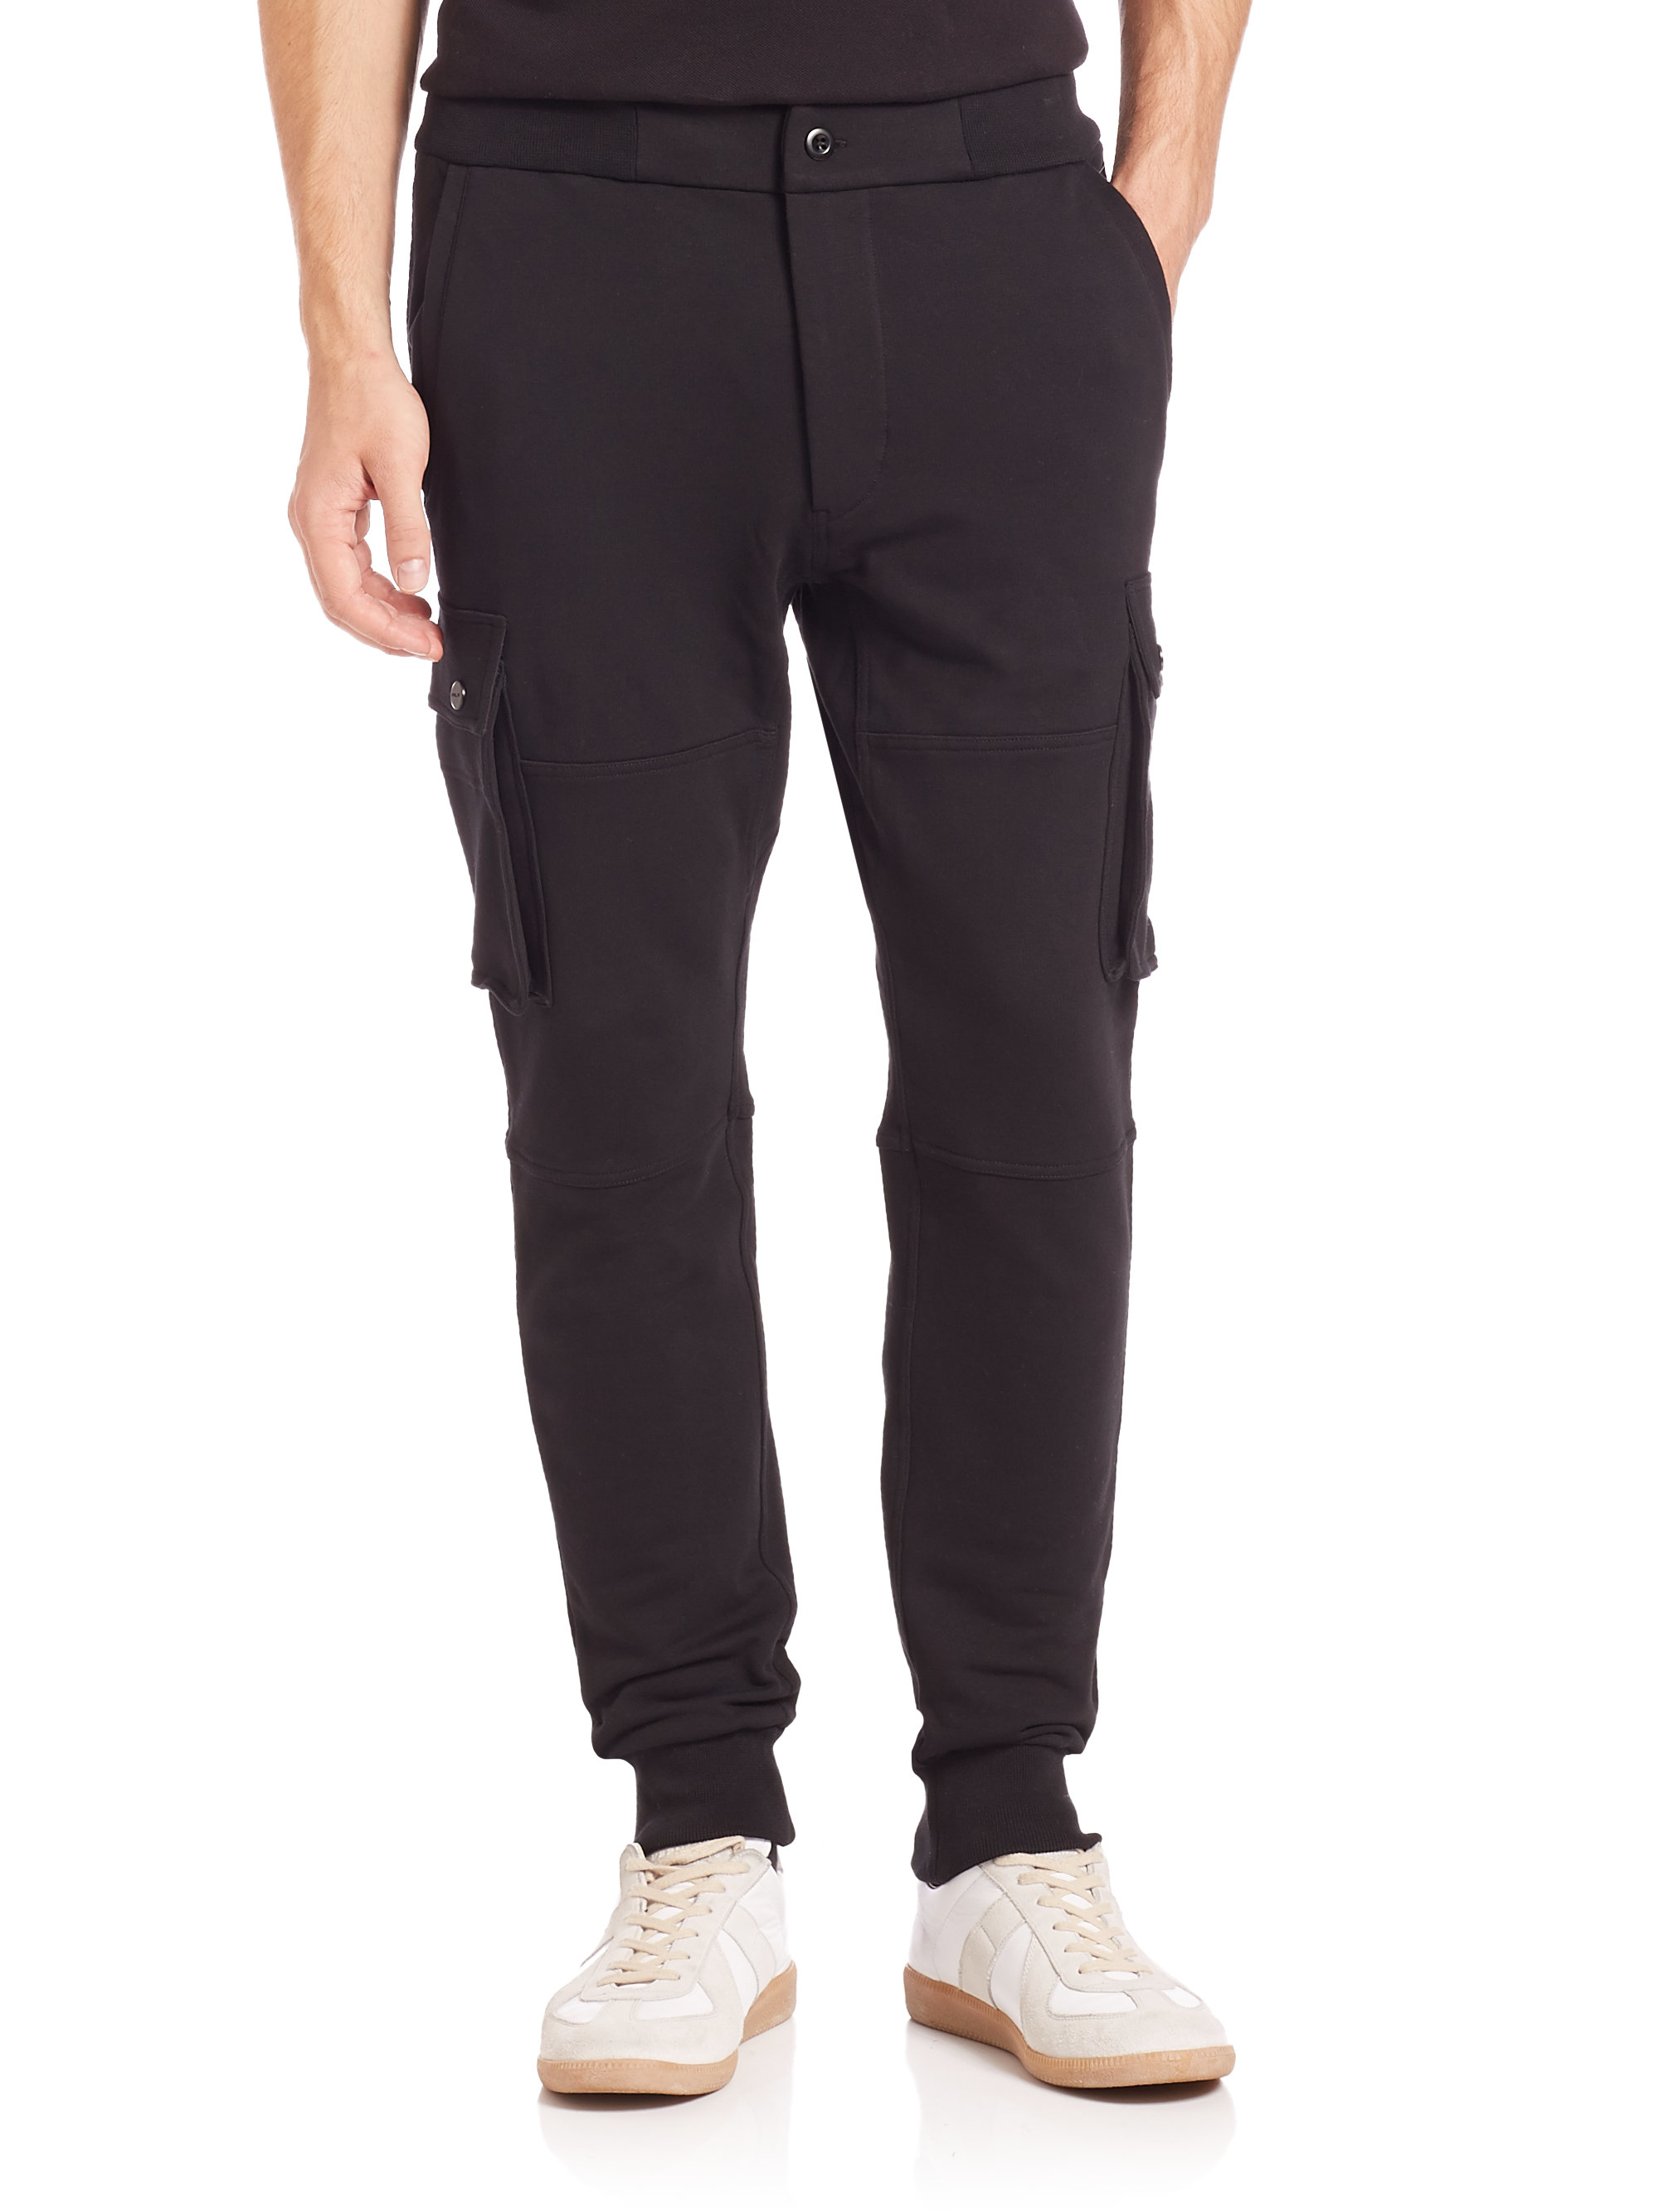 Lyst - Polo Ralph Lauren Knit Cargo Pants in Black for Men